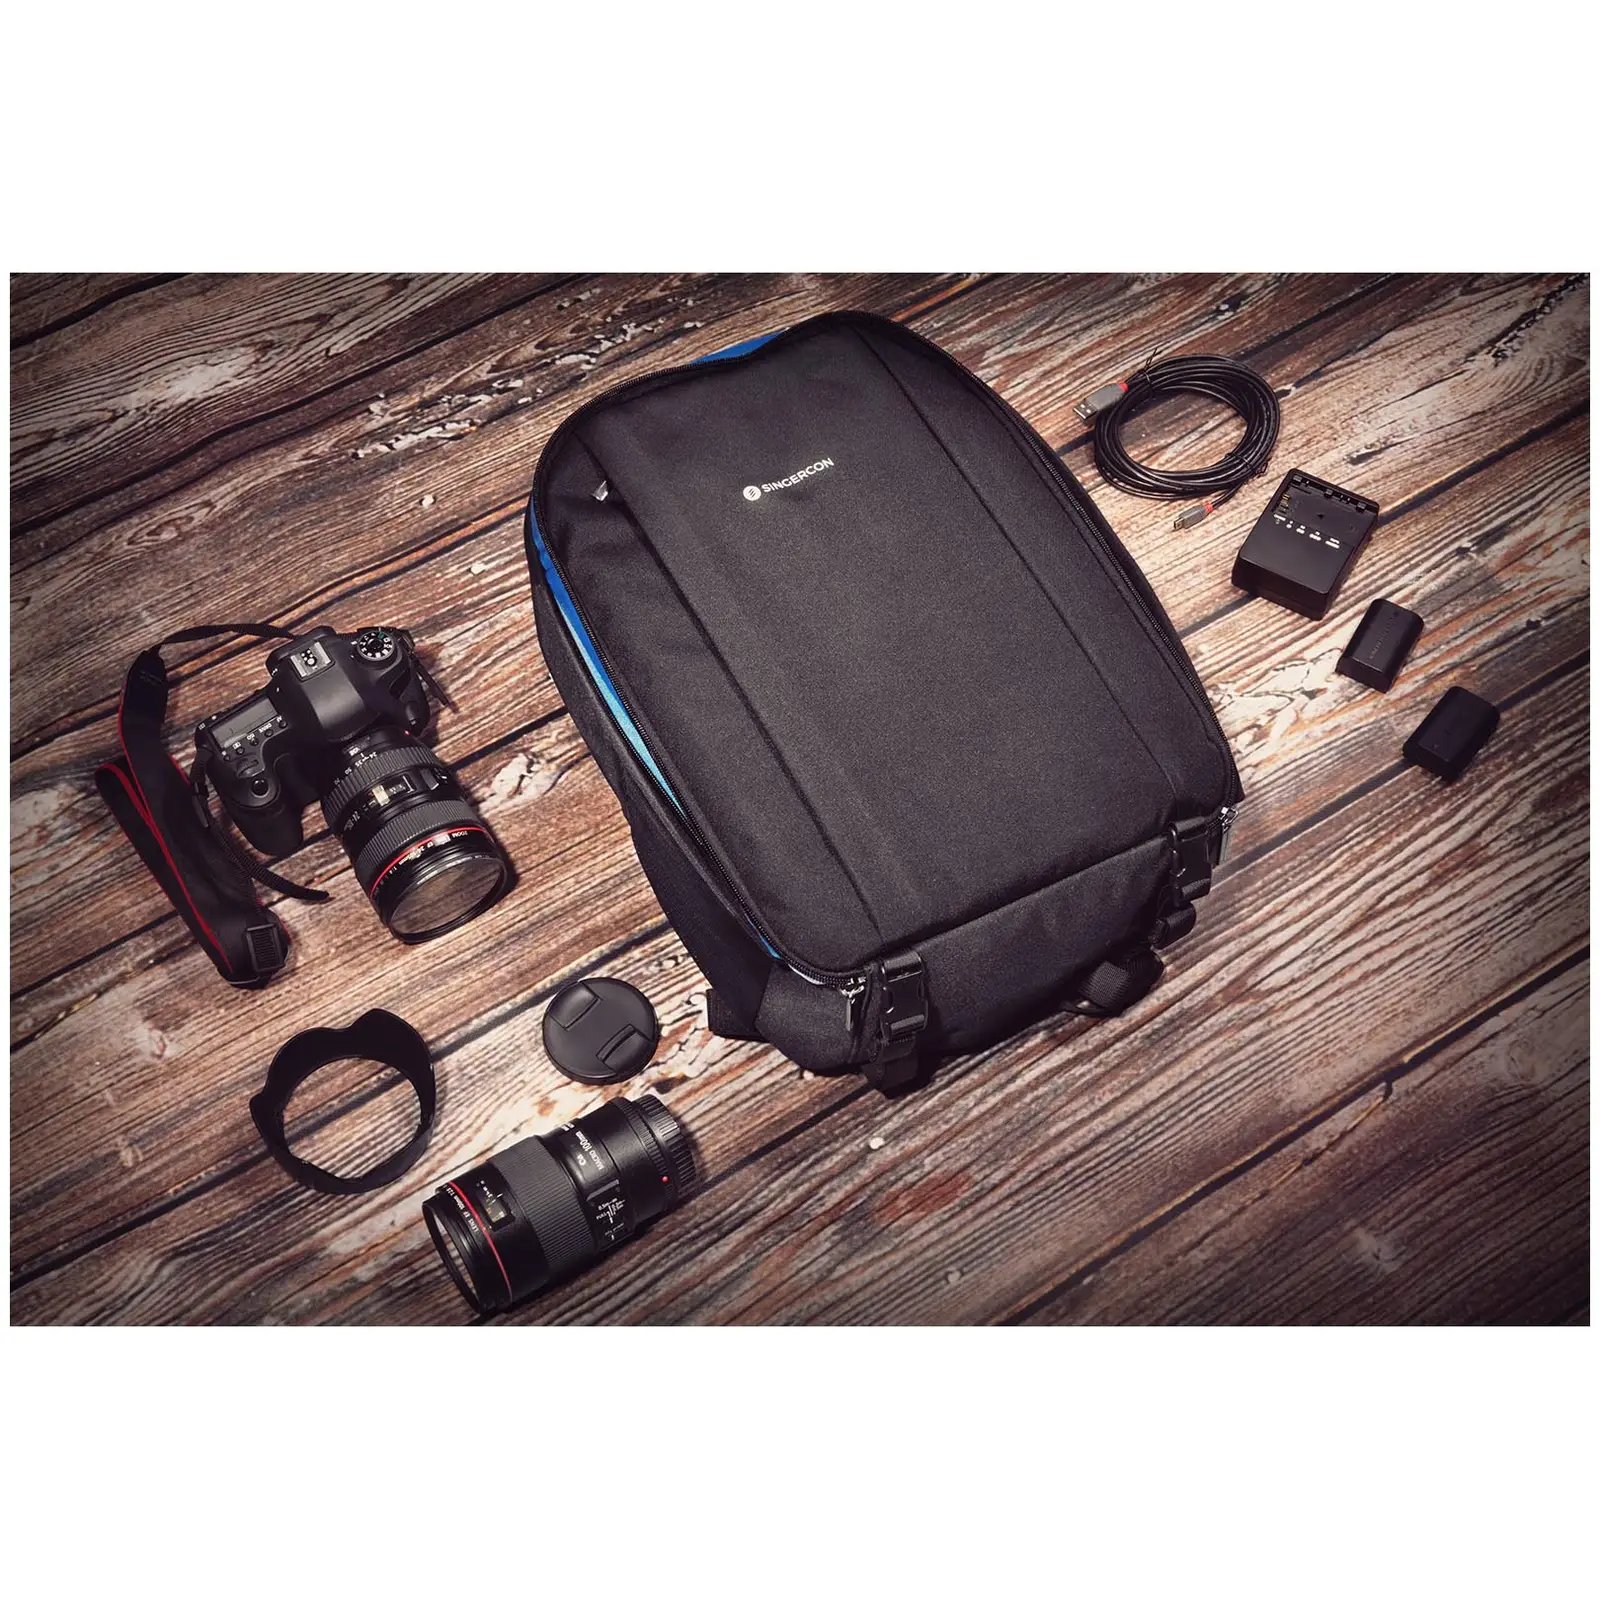 Plecak fotograficzny - do 30 kg - na 2 aparaty